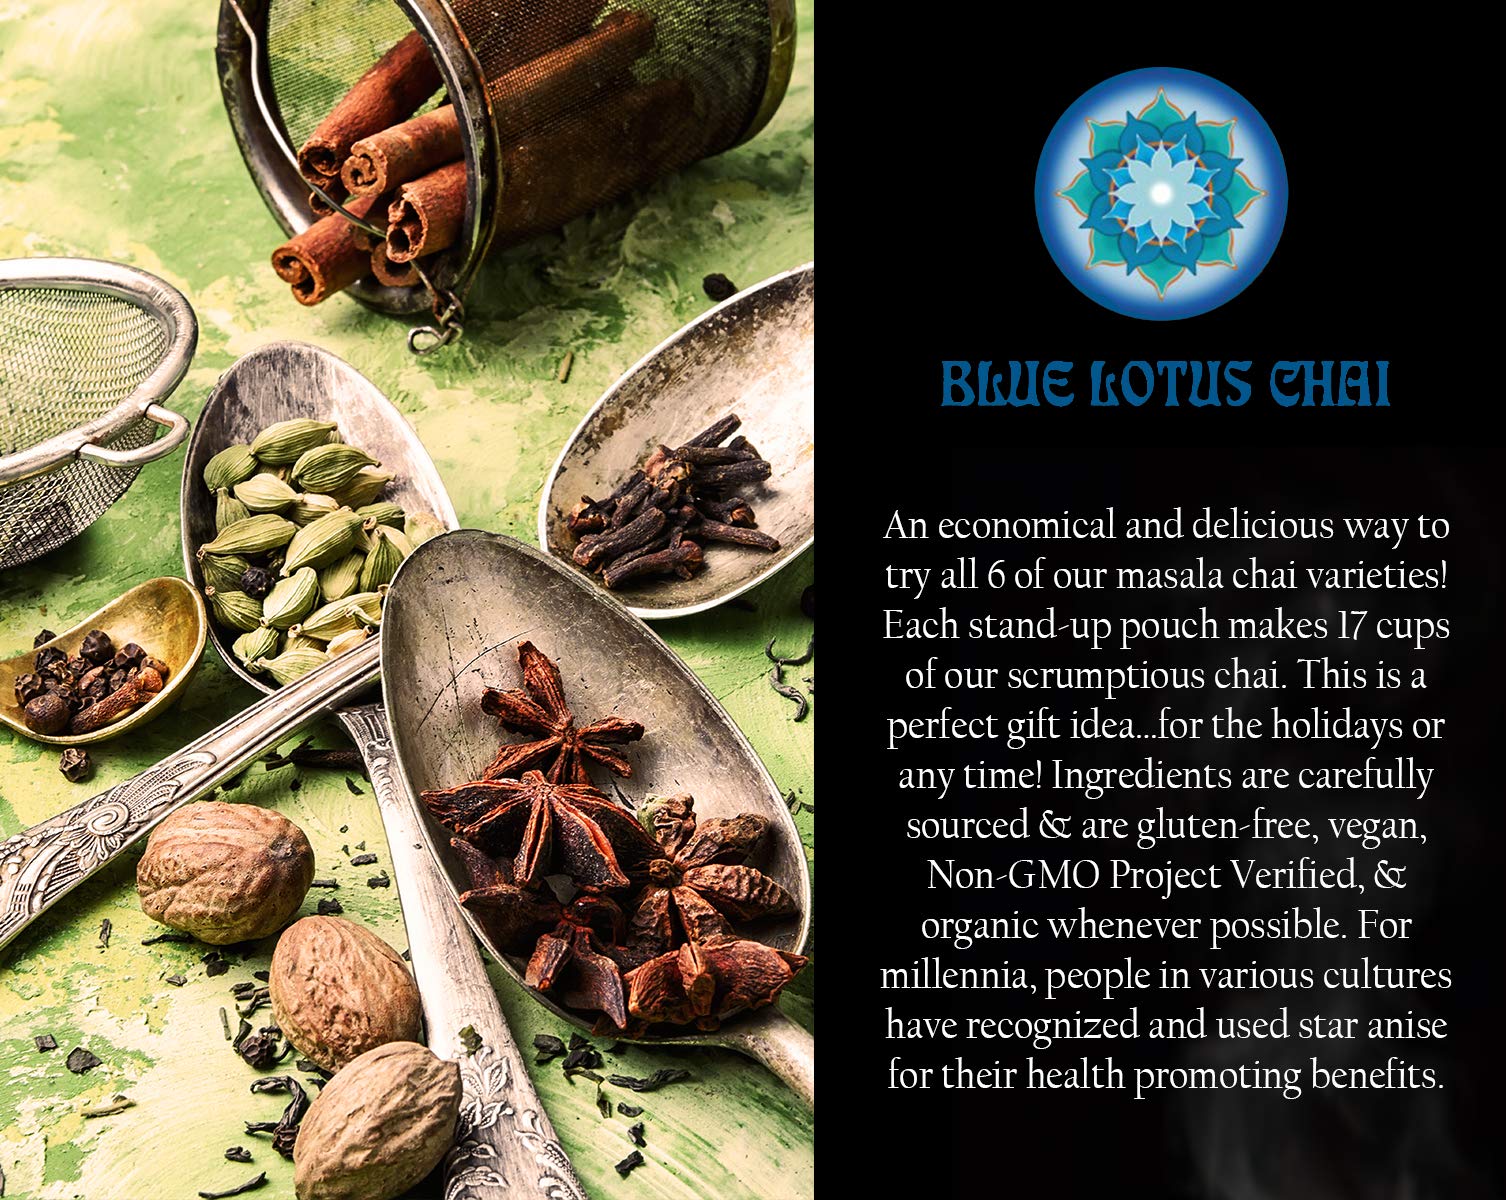 Blue Lotus Chai - Masala Chai Collection - Six Varieties - 0.5 oz each (14.17g)